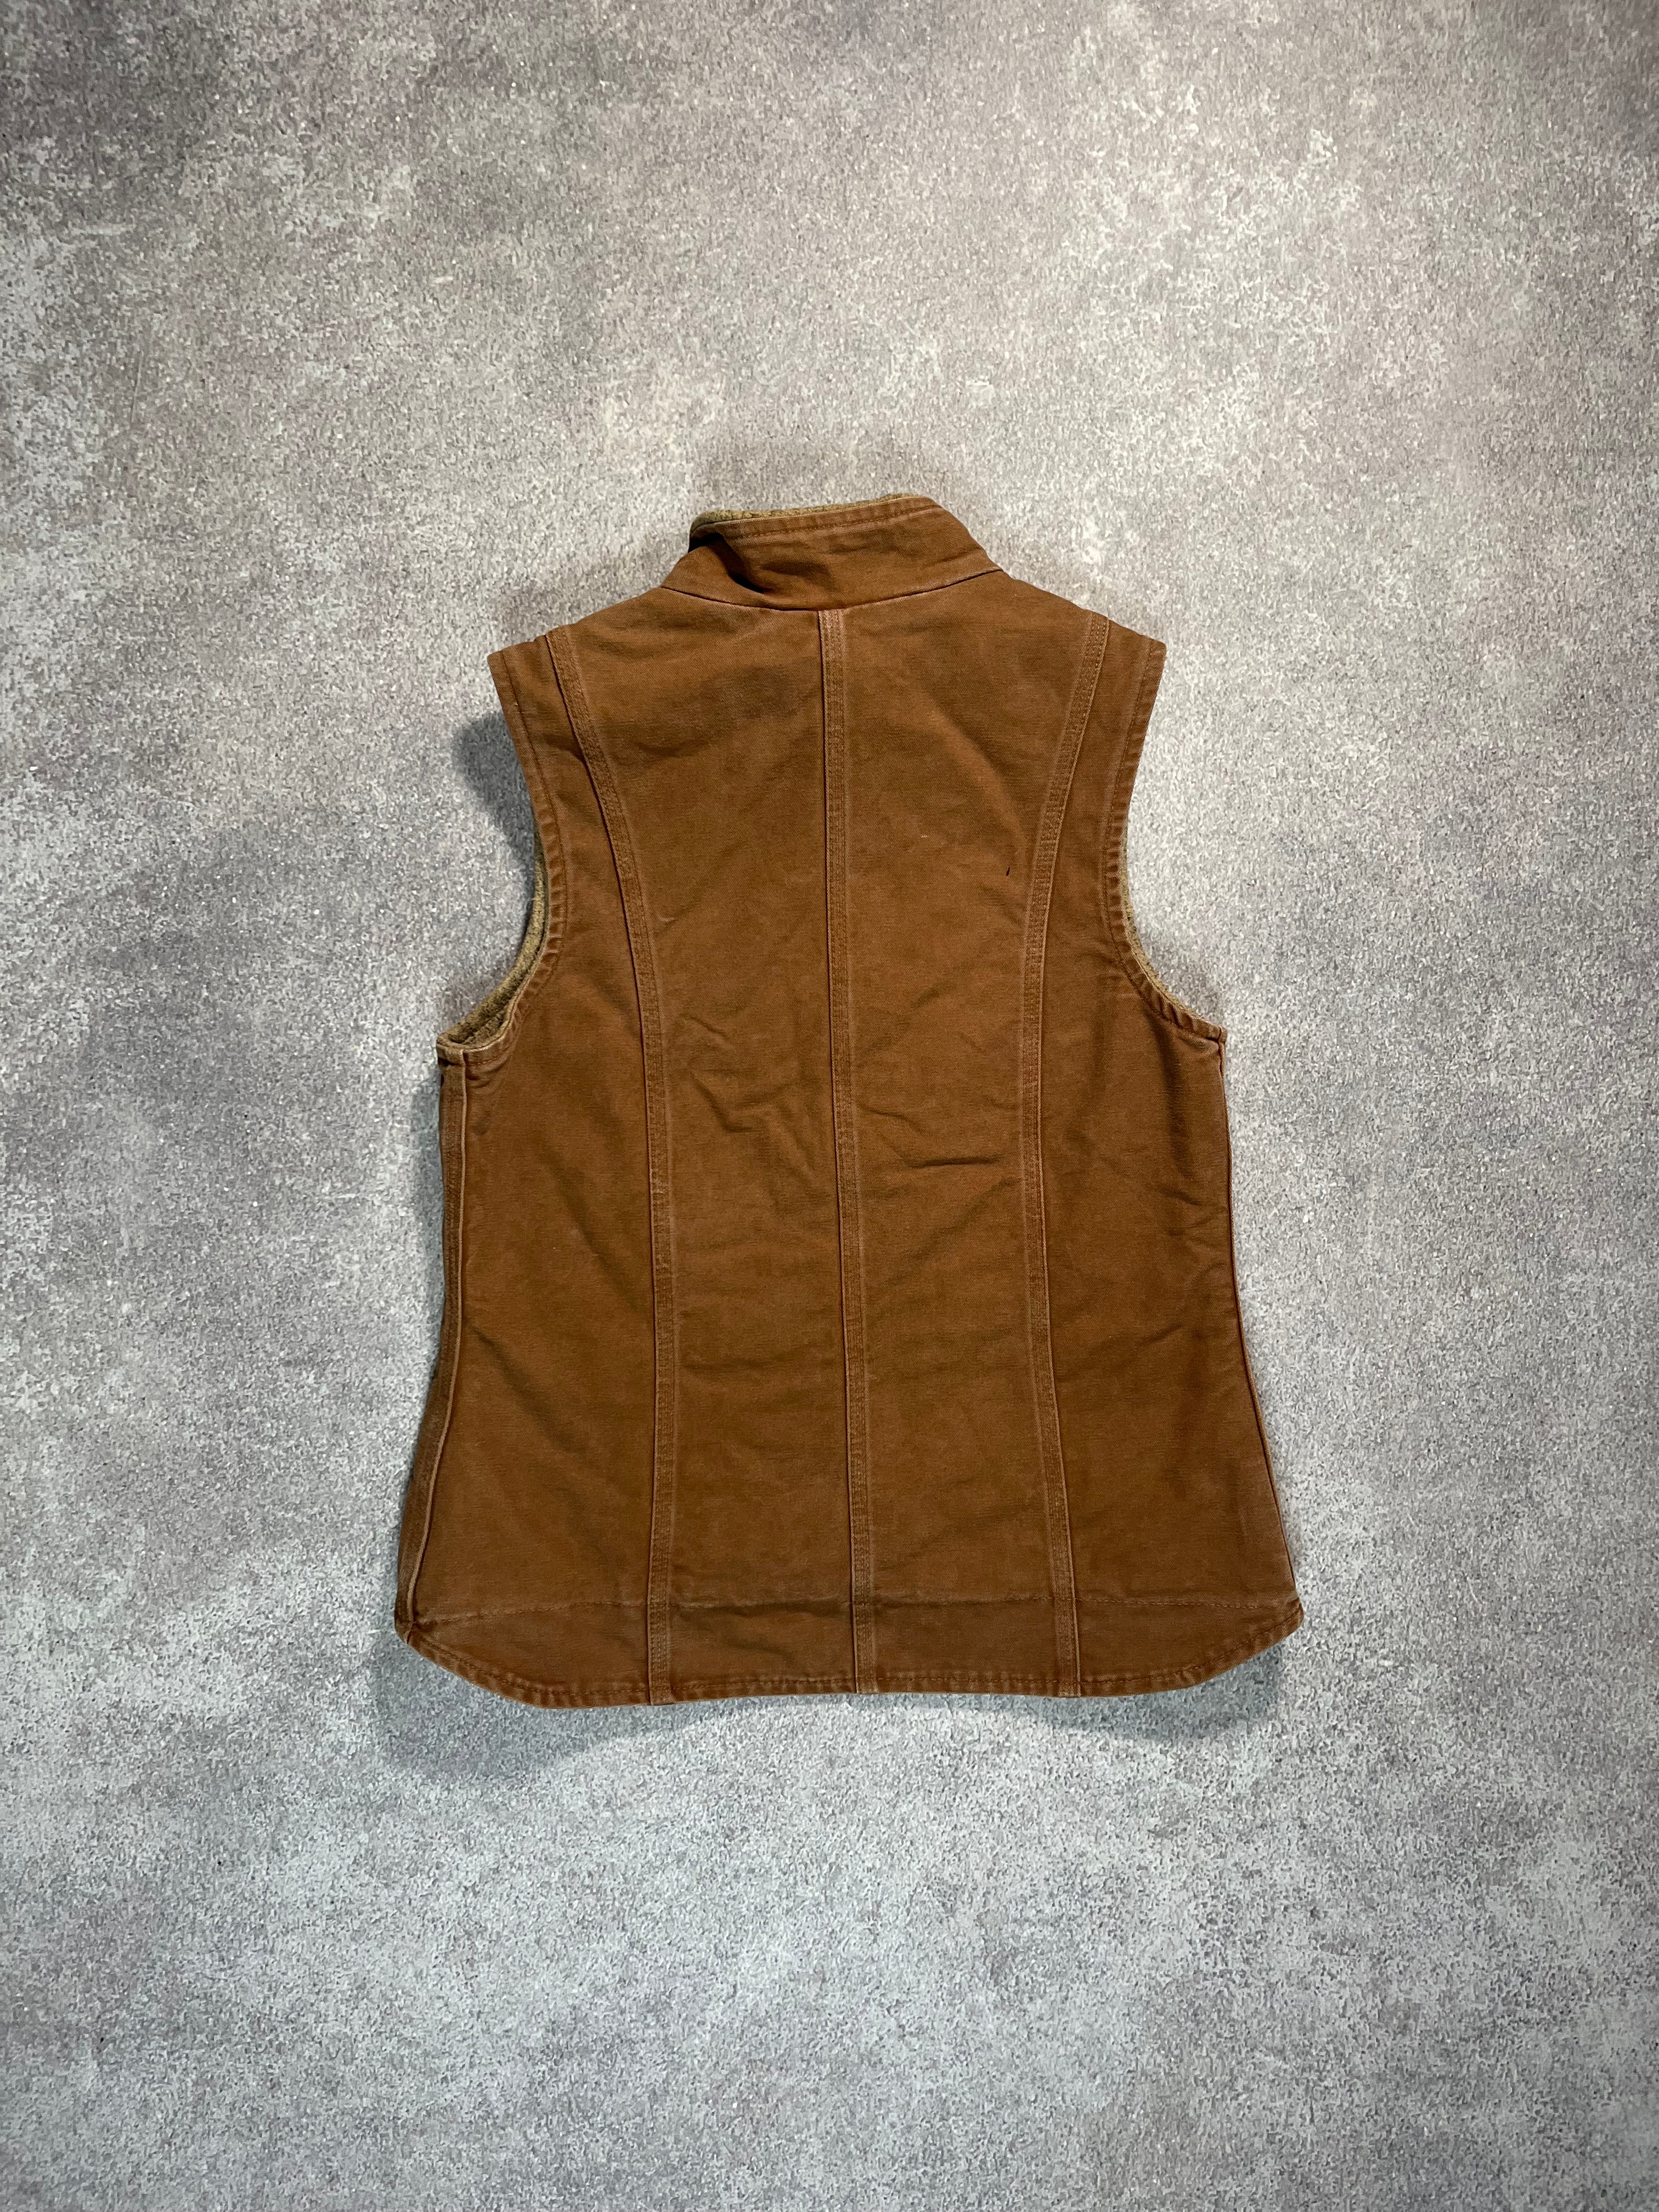 Carhartt Canvas Vest Brown // Small - RHAGHOUSE VINTAGE